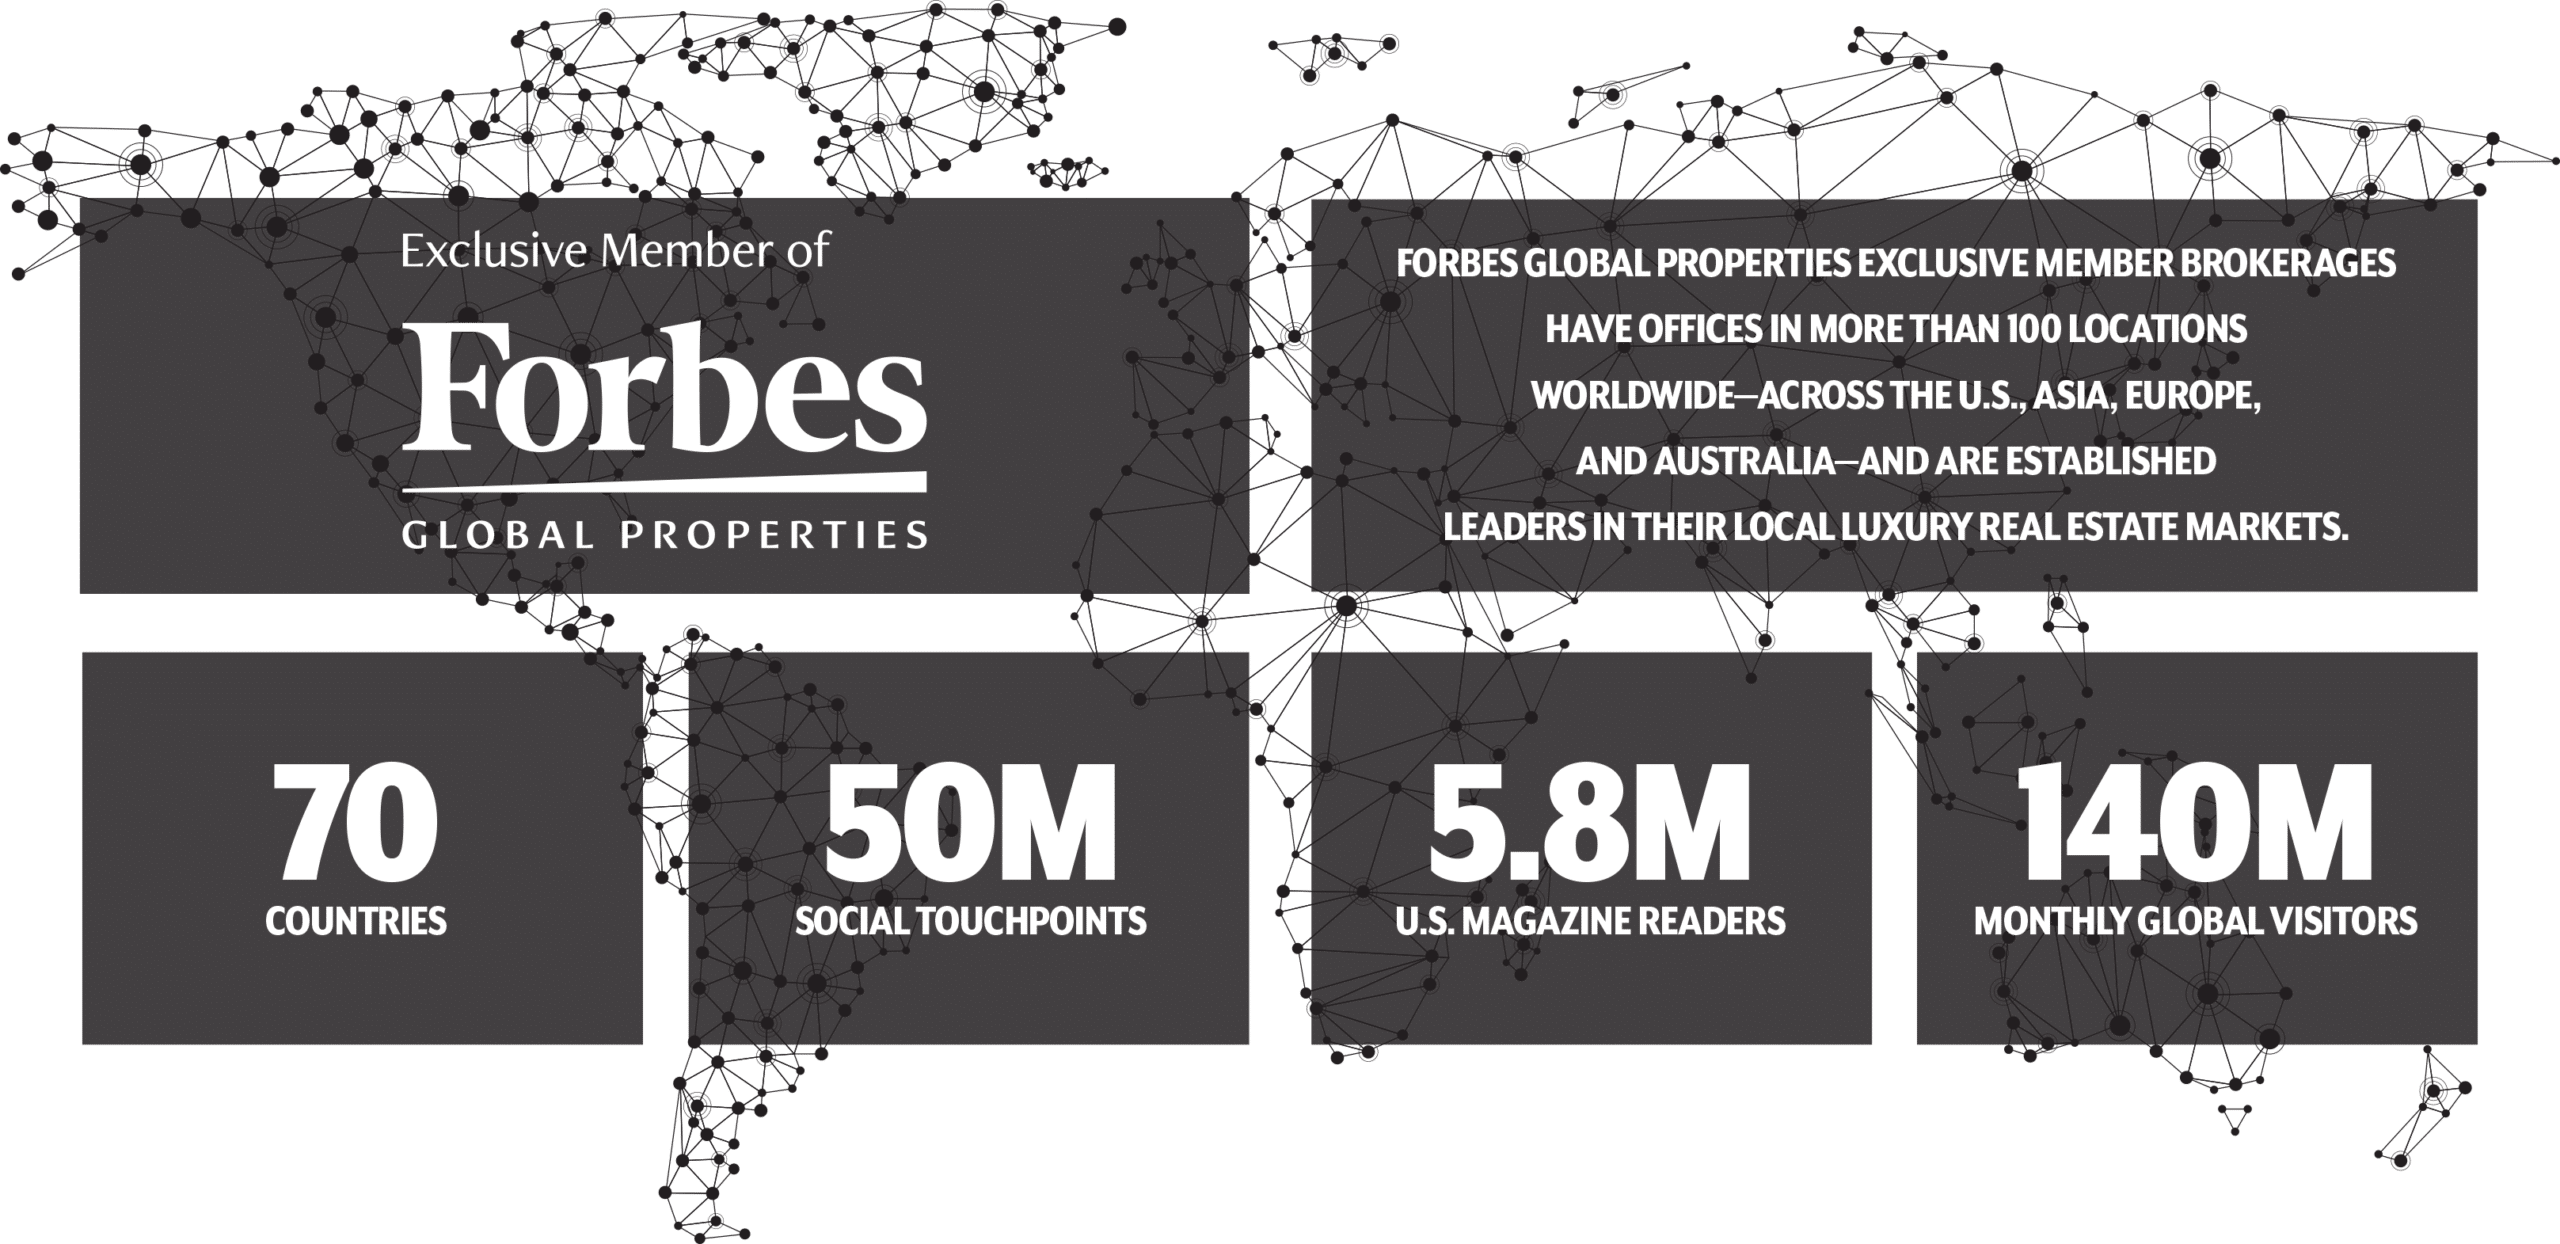 Forbes Global Properties statistics